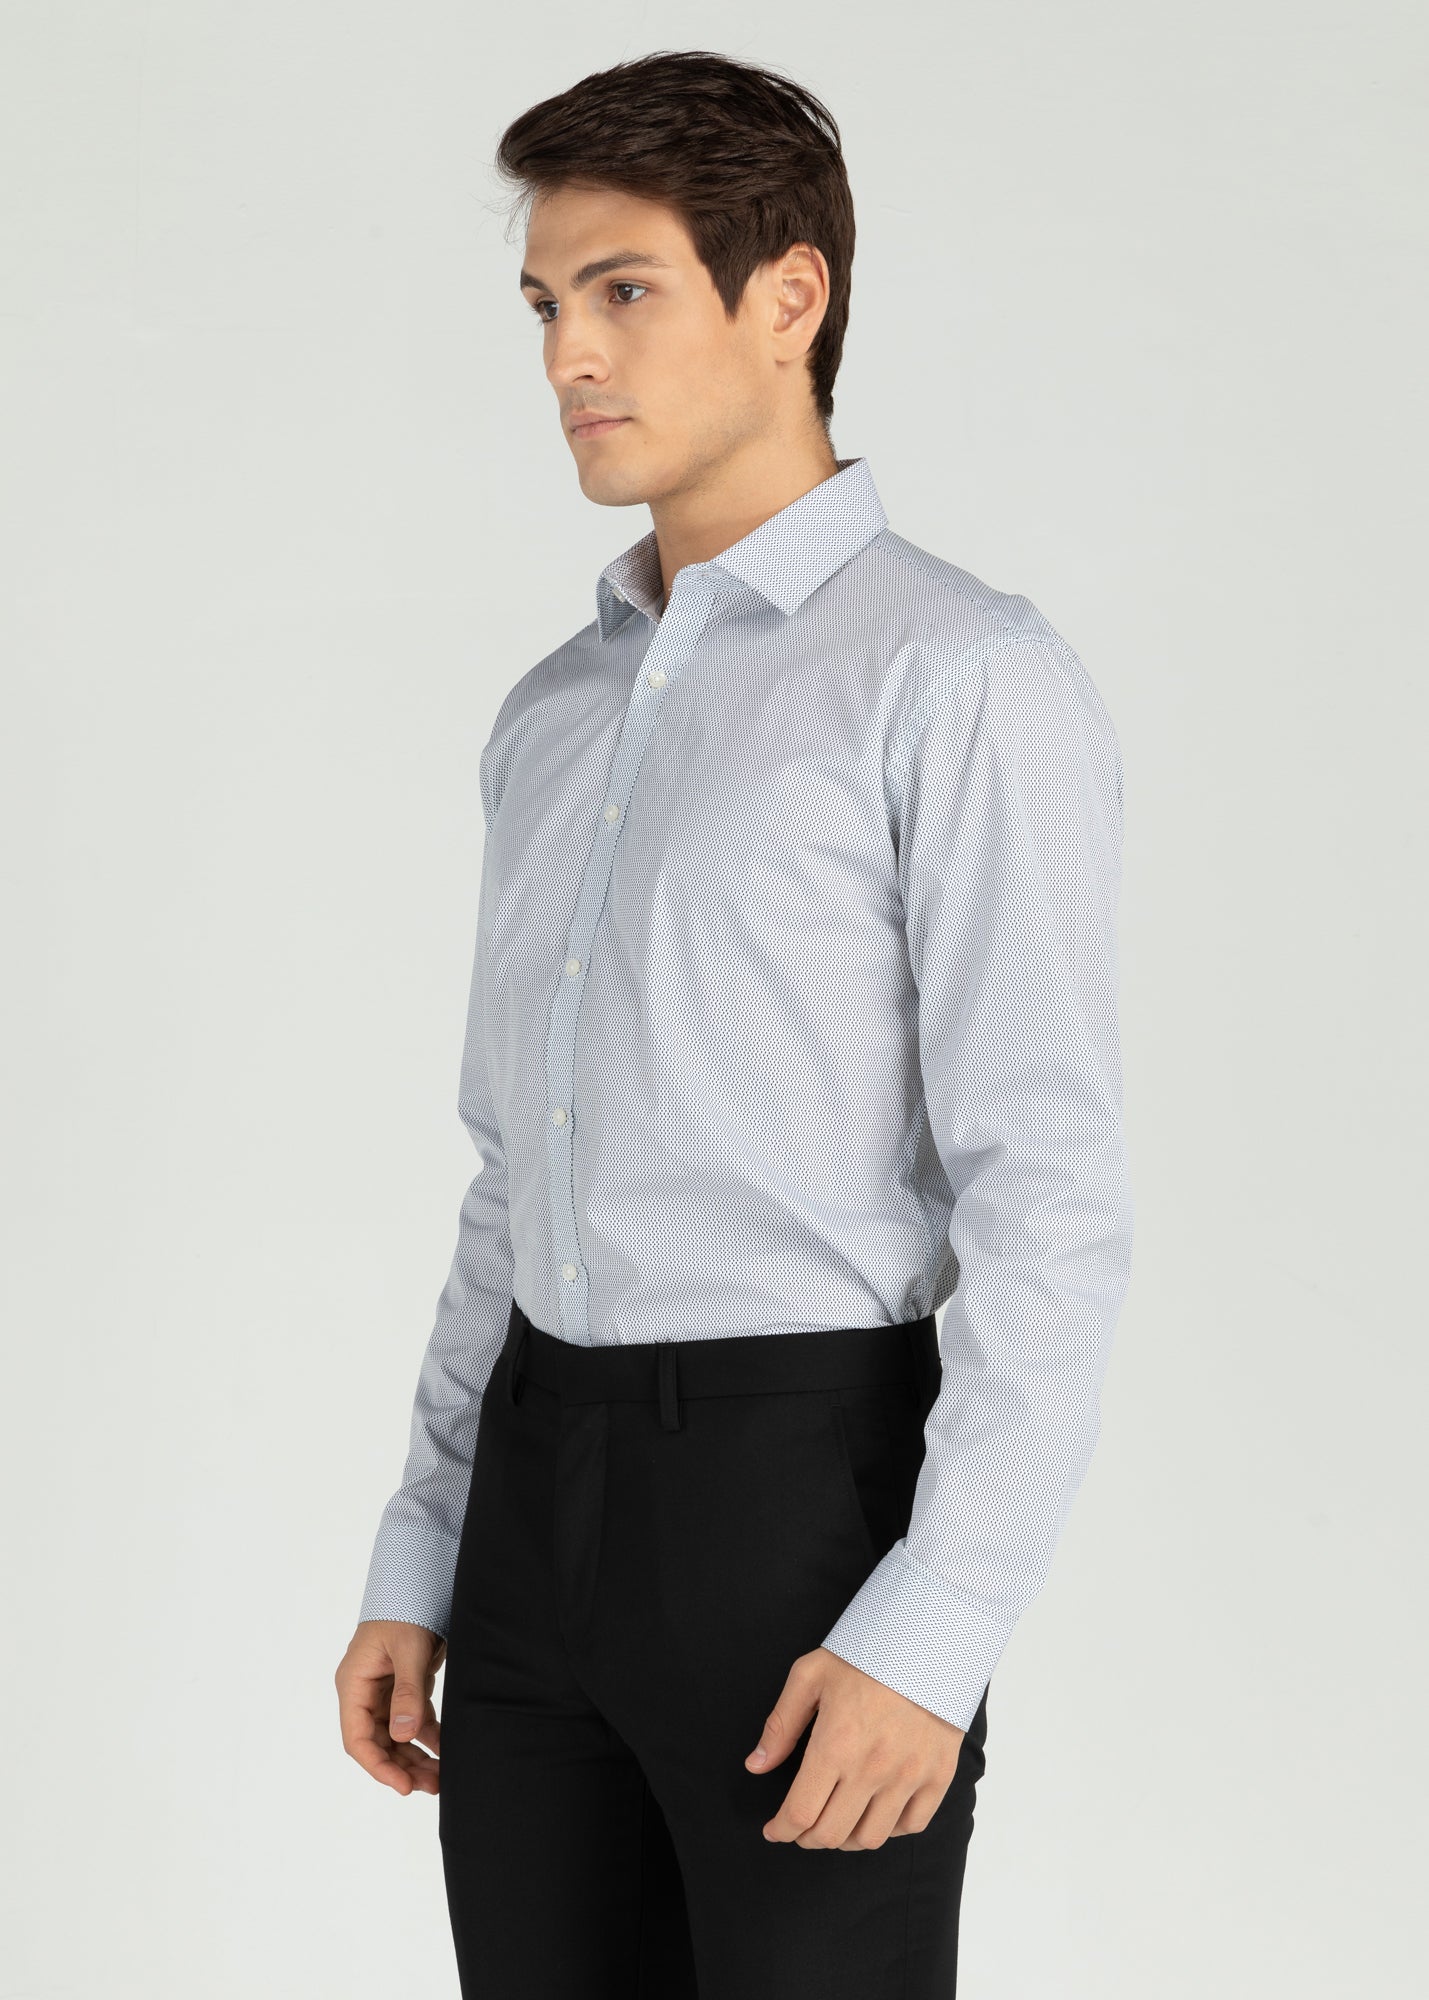 BlueChip Premium Fine cotton printed dress shirt